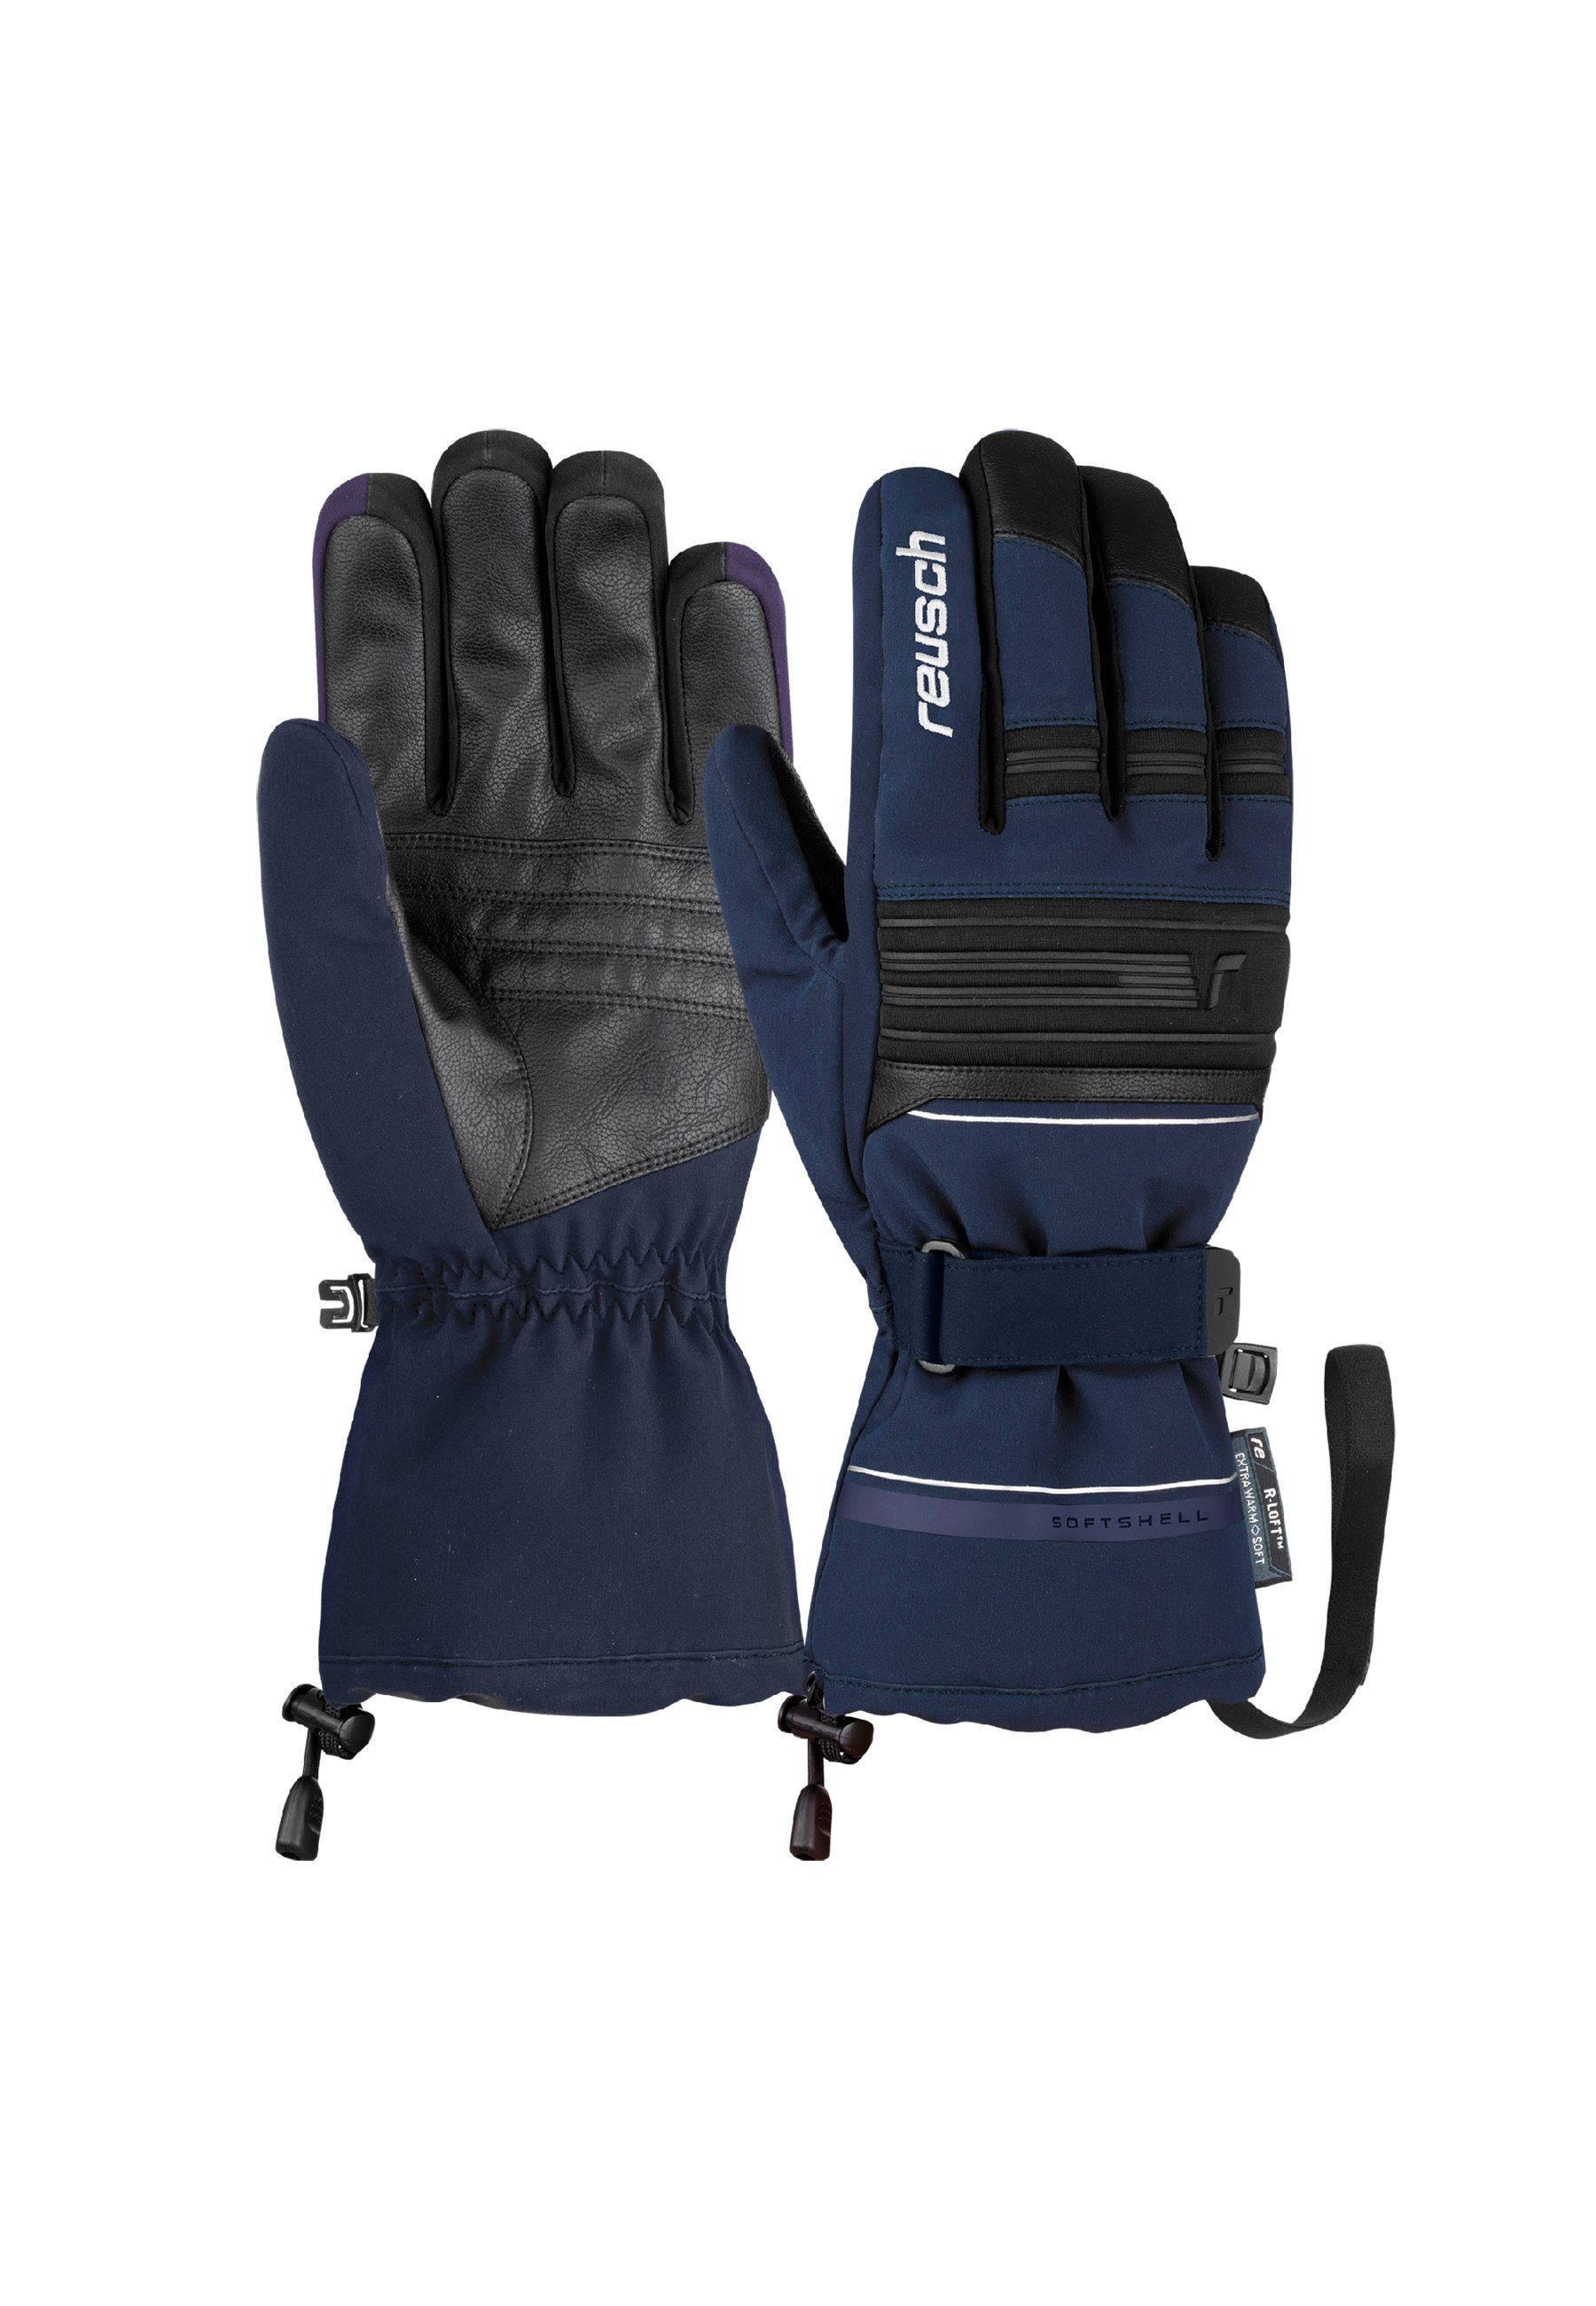 R-TEX® wasserdichtem XT Design und Kondor Skihandschuhe atmungsaktivem Reusch in blau-schwarz